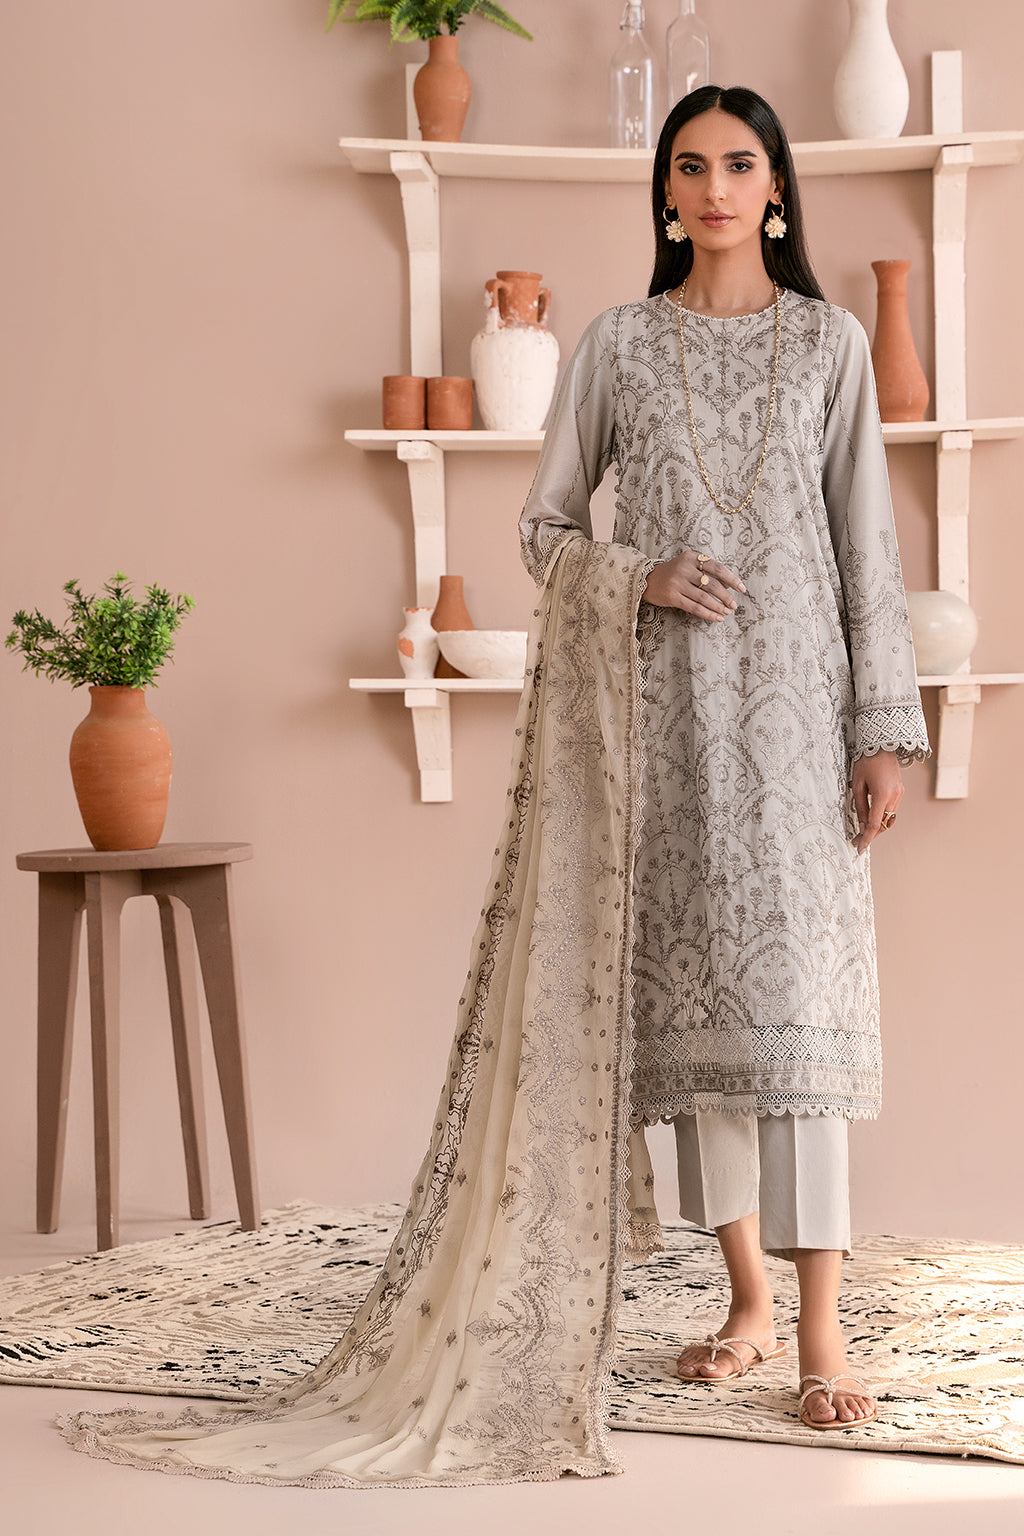 Shop Now, ZEA#5 - Eid ul Adha Lawn 2023 - Zarif -Shahana Collection UK - Wedding and Bridal Party Wear - Eid Edit 2023